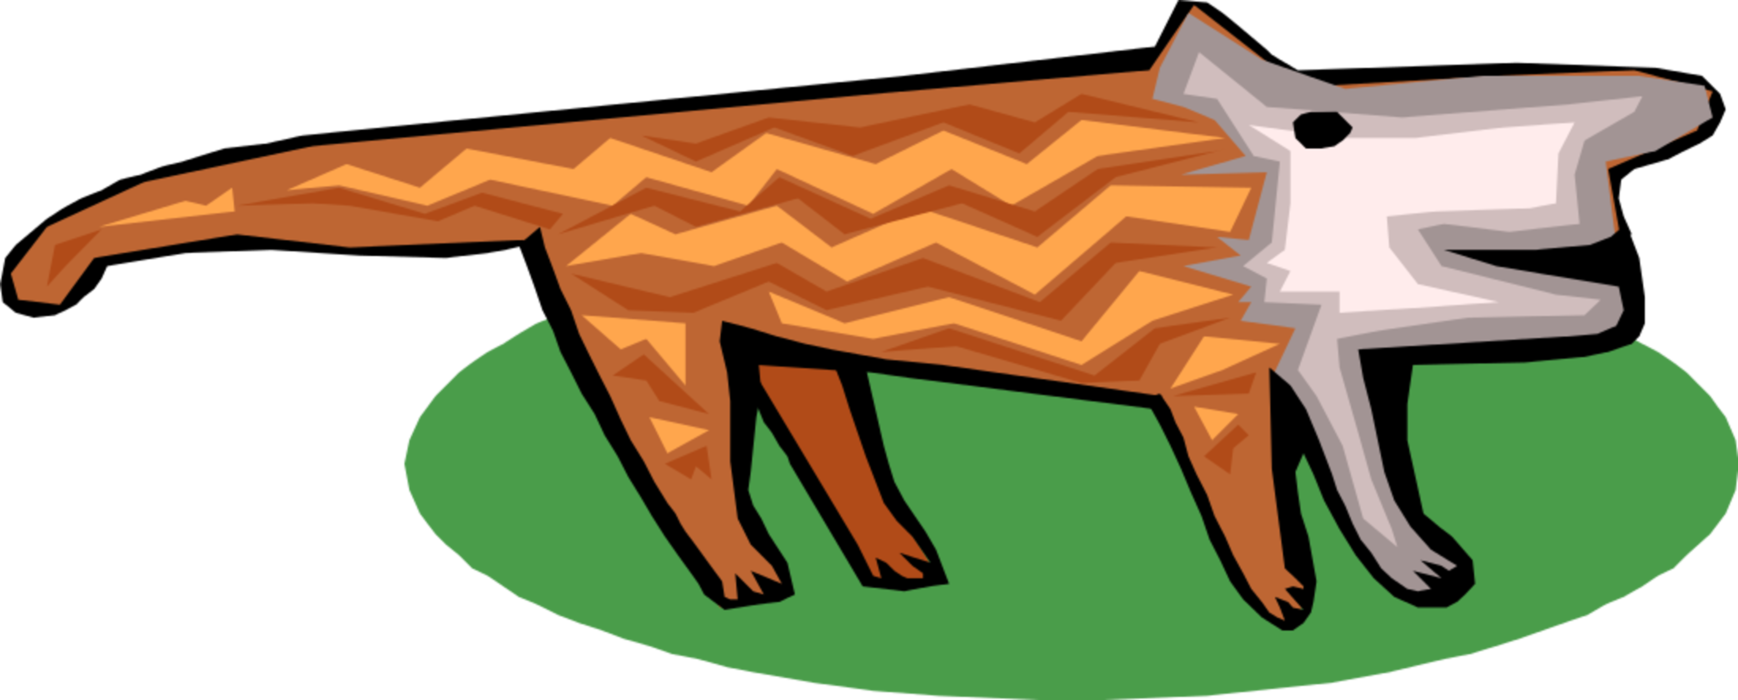 Vector Illustration of Striped Animal